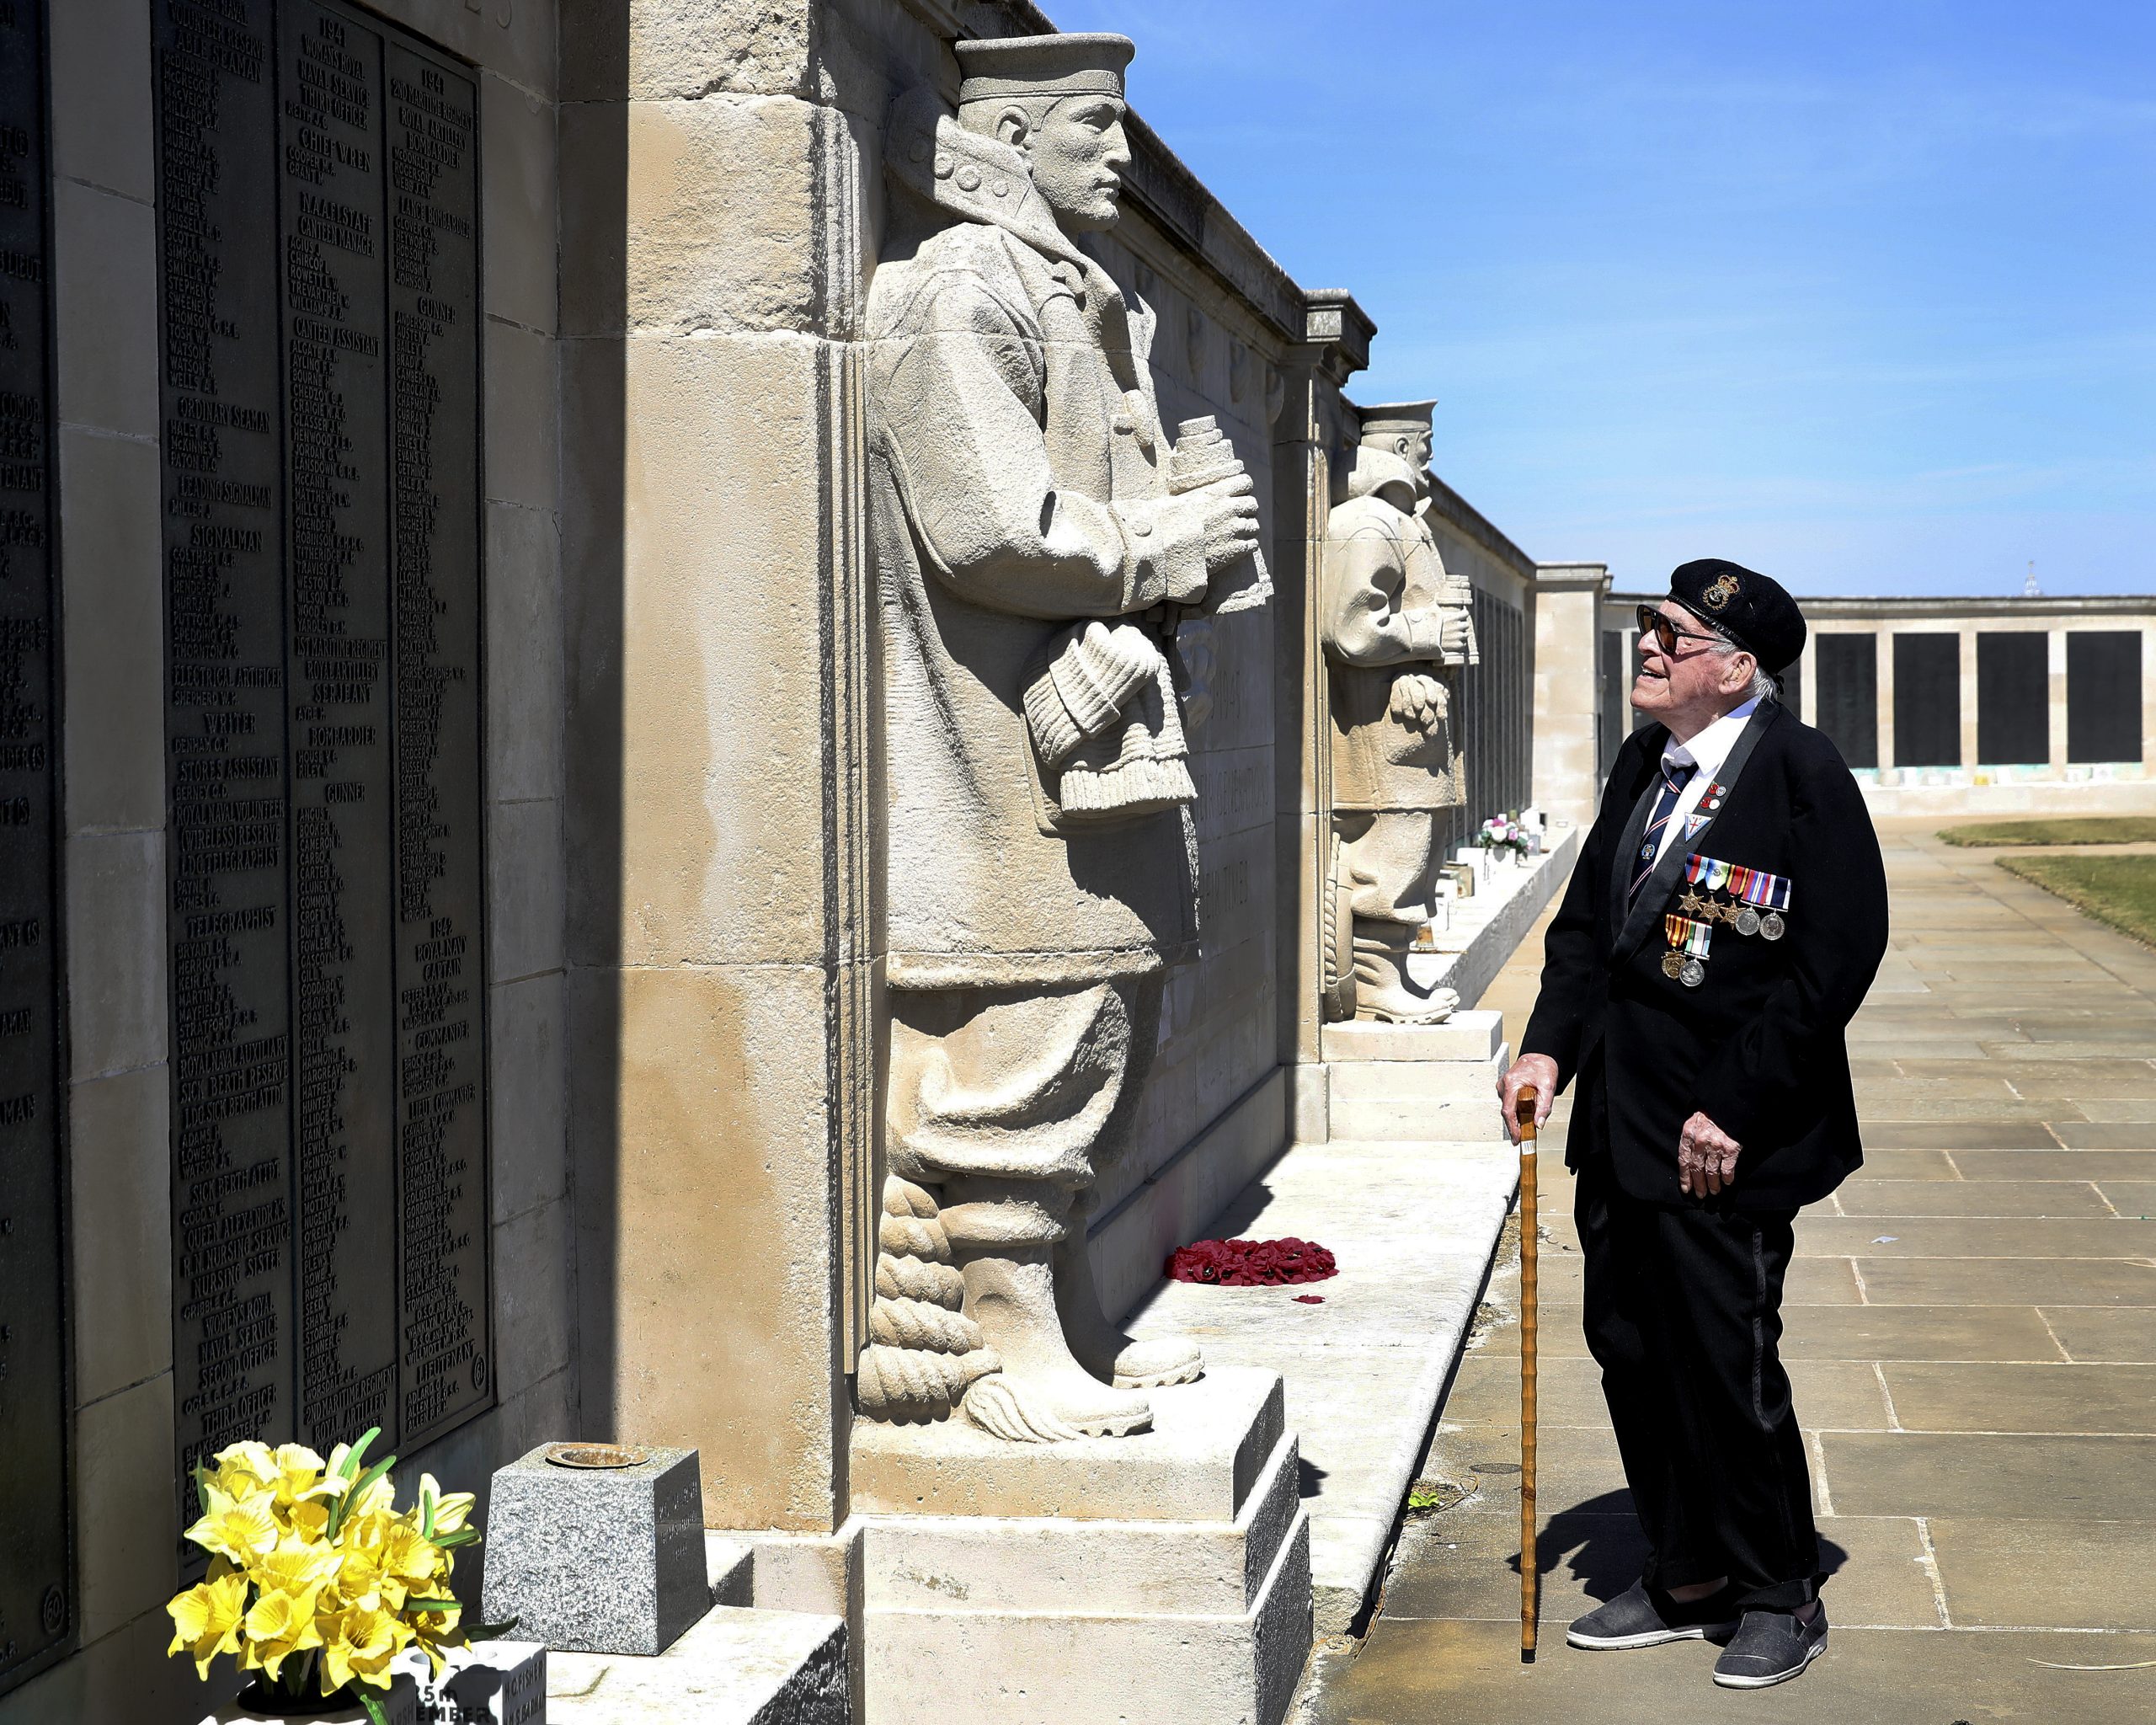 Portsmouth Veteran Honours Comrades On Dunkirk Anniversary